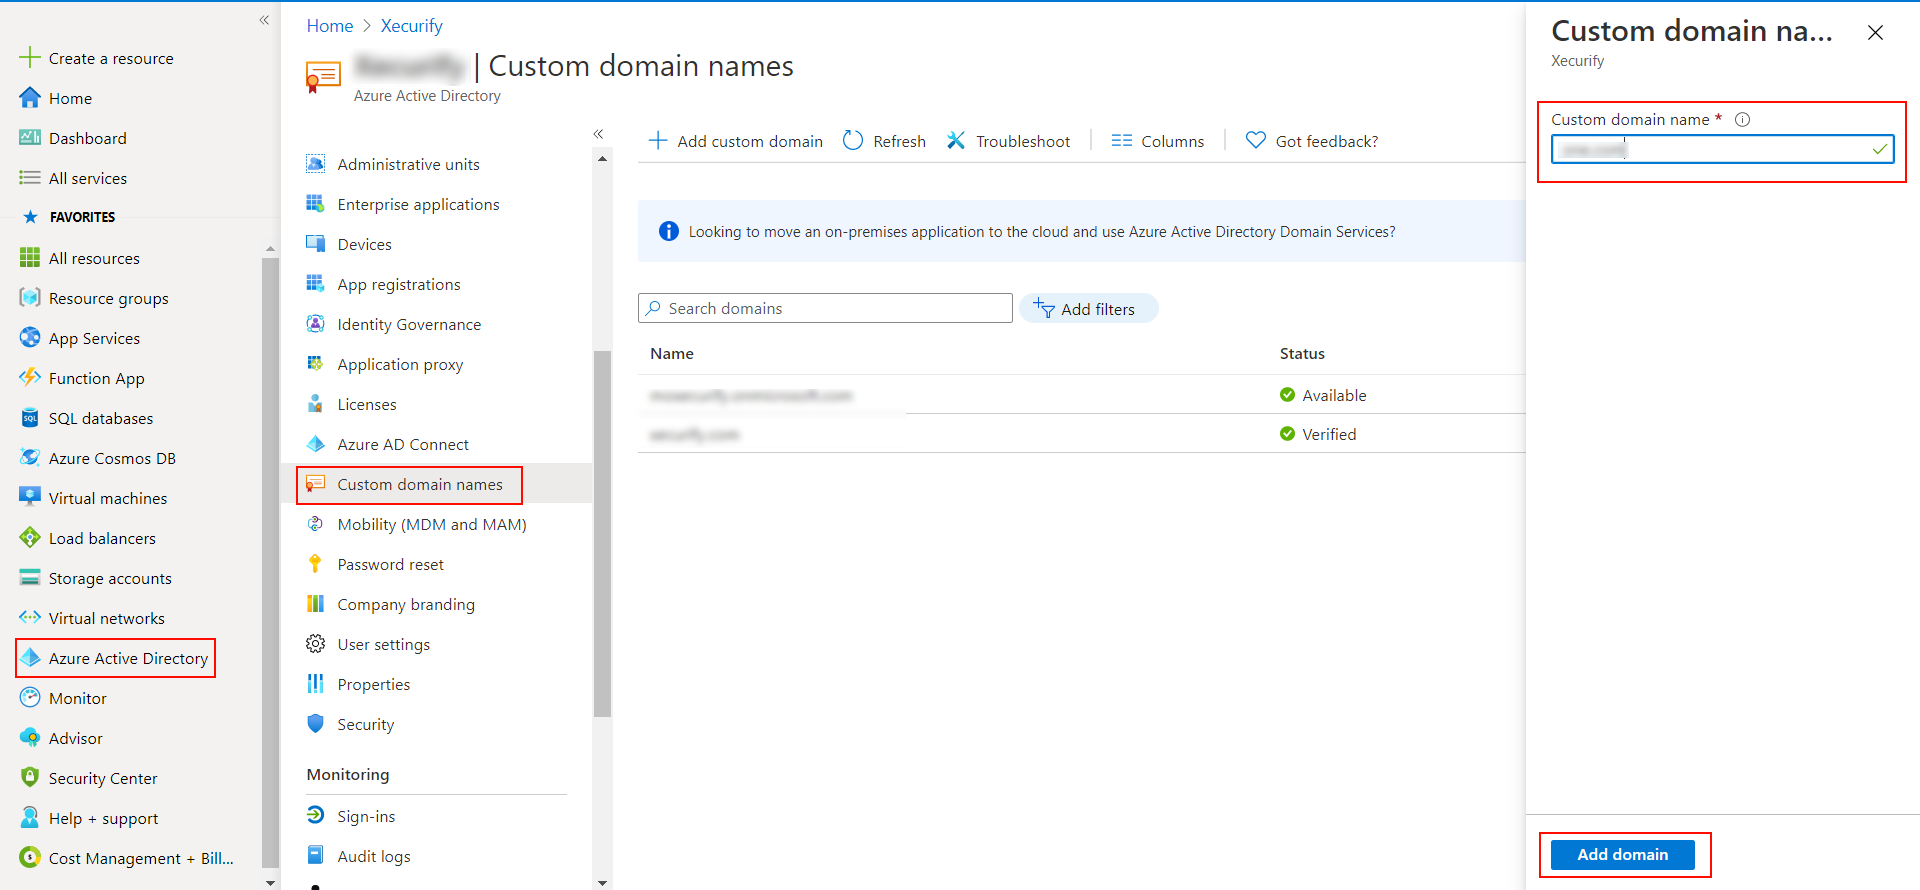 Microsoft Outlook Single Sign-On (SSO) Add custom domain